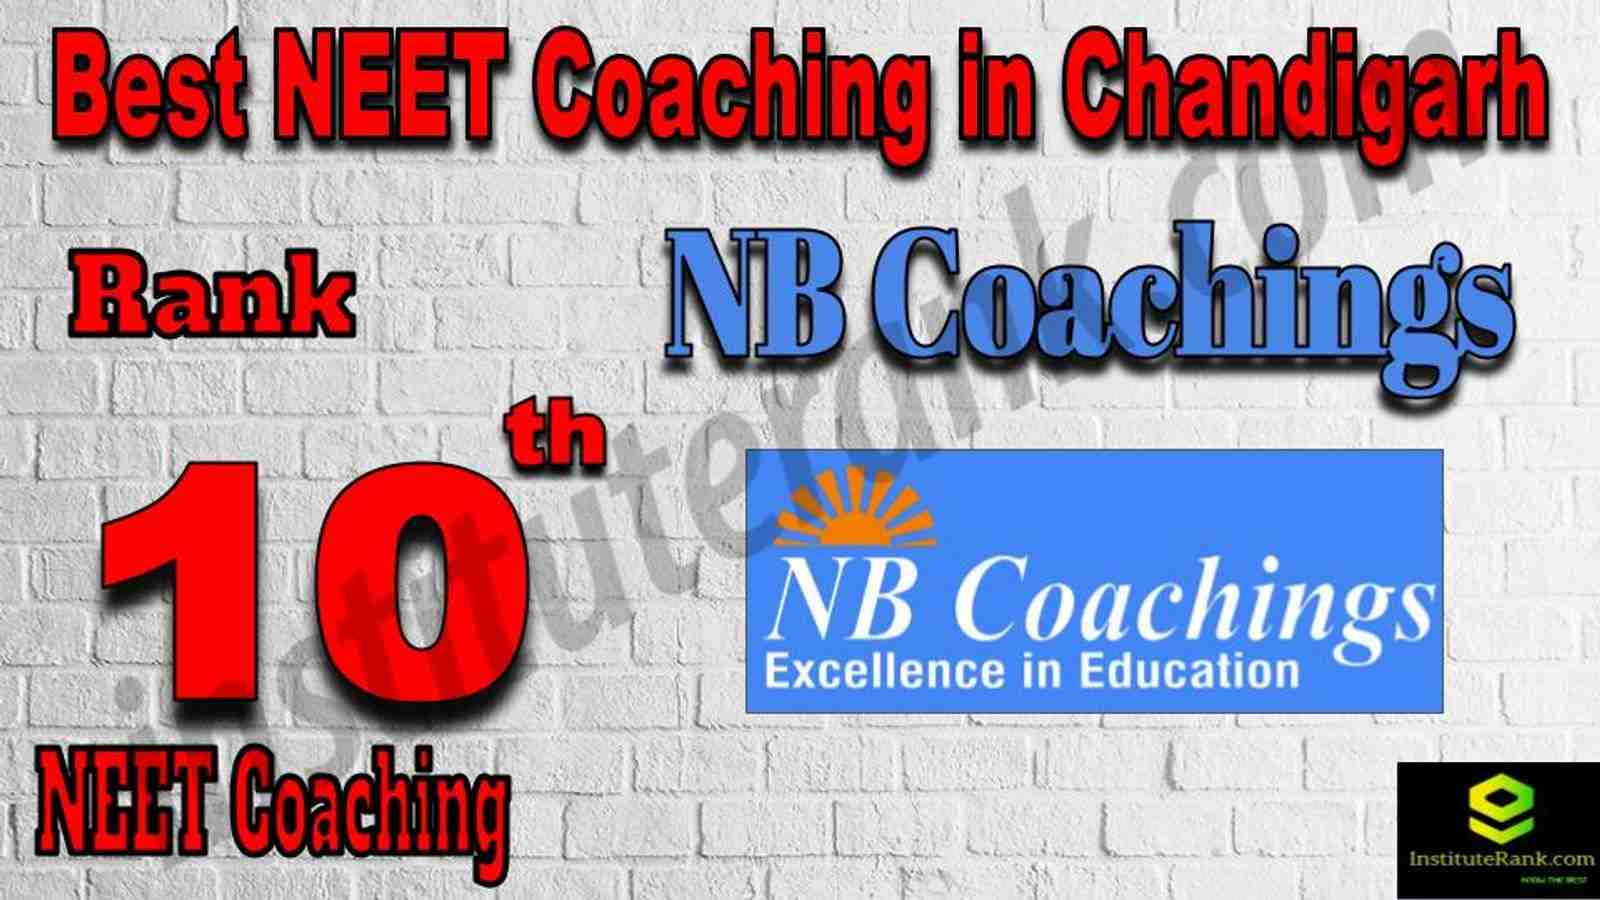 10th Best NEET Coaching in Chandigarh